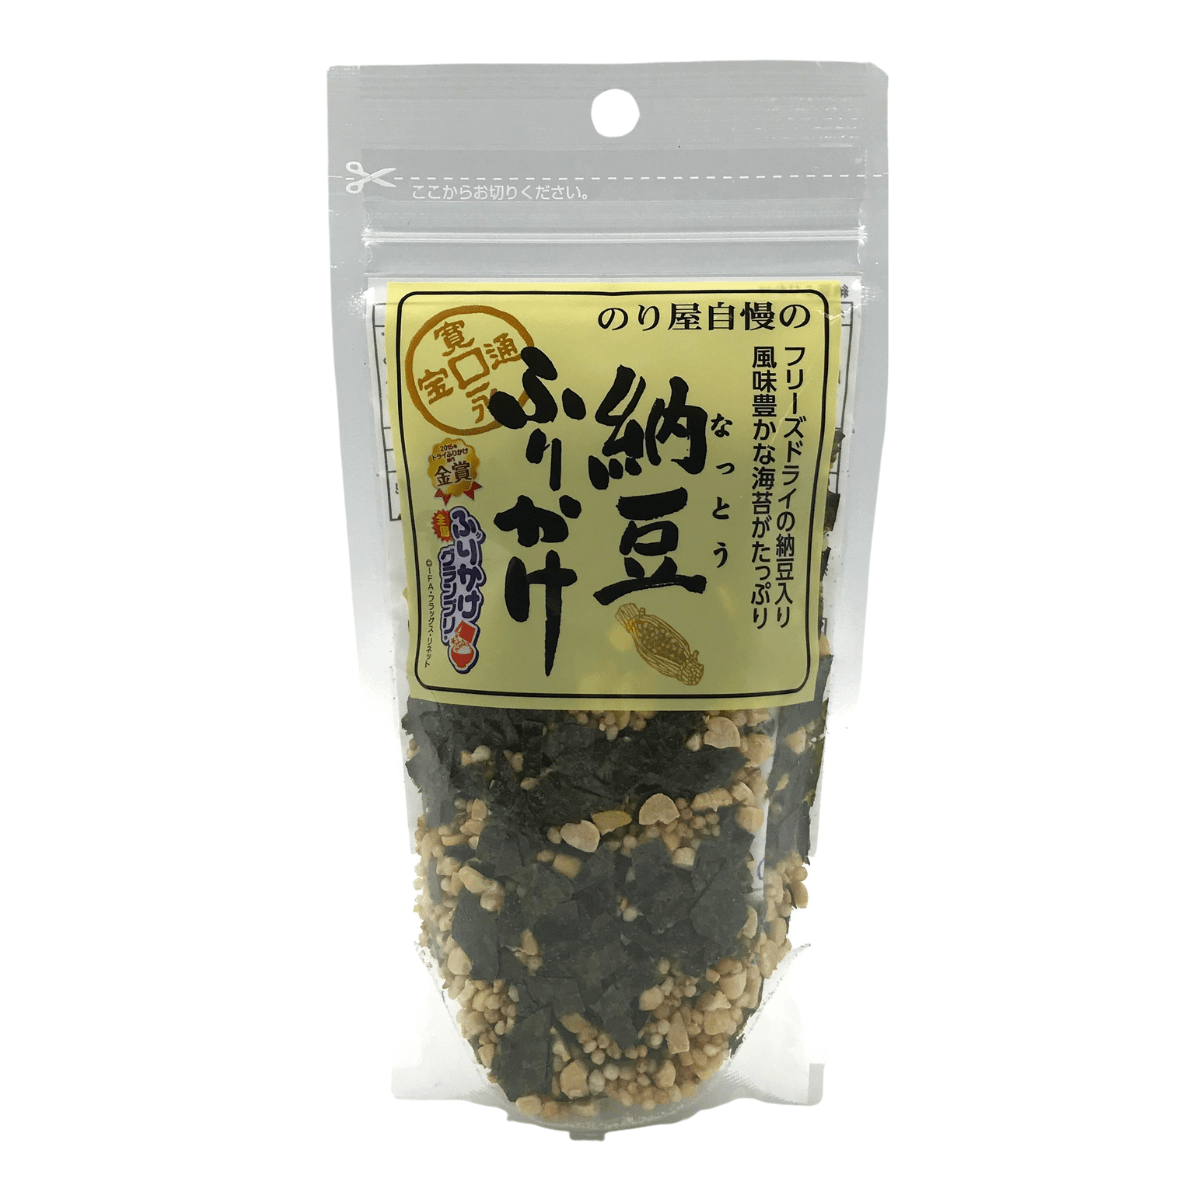 TSUHO Natto Fermented Soy Sprinkles - Tokyo Fresh Direct